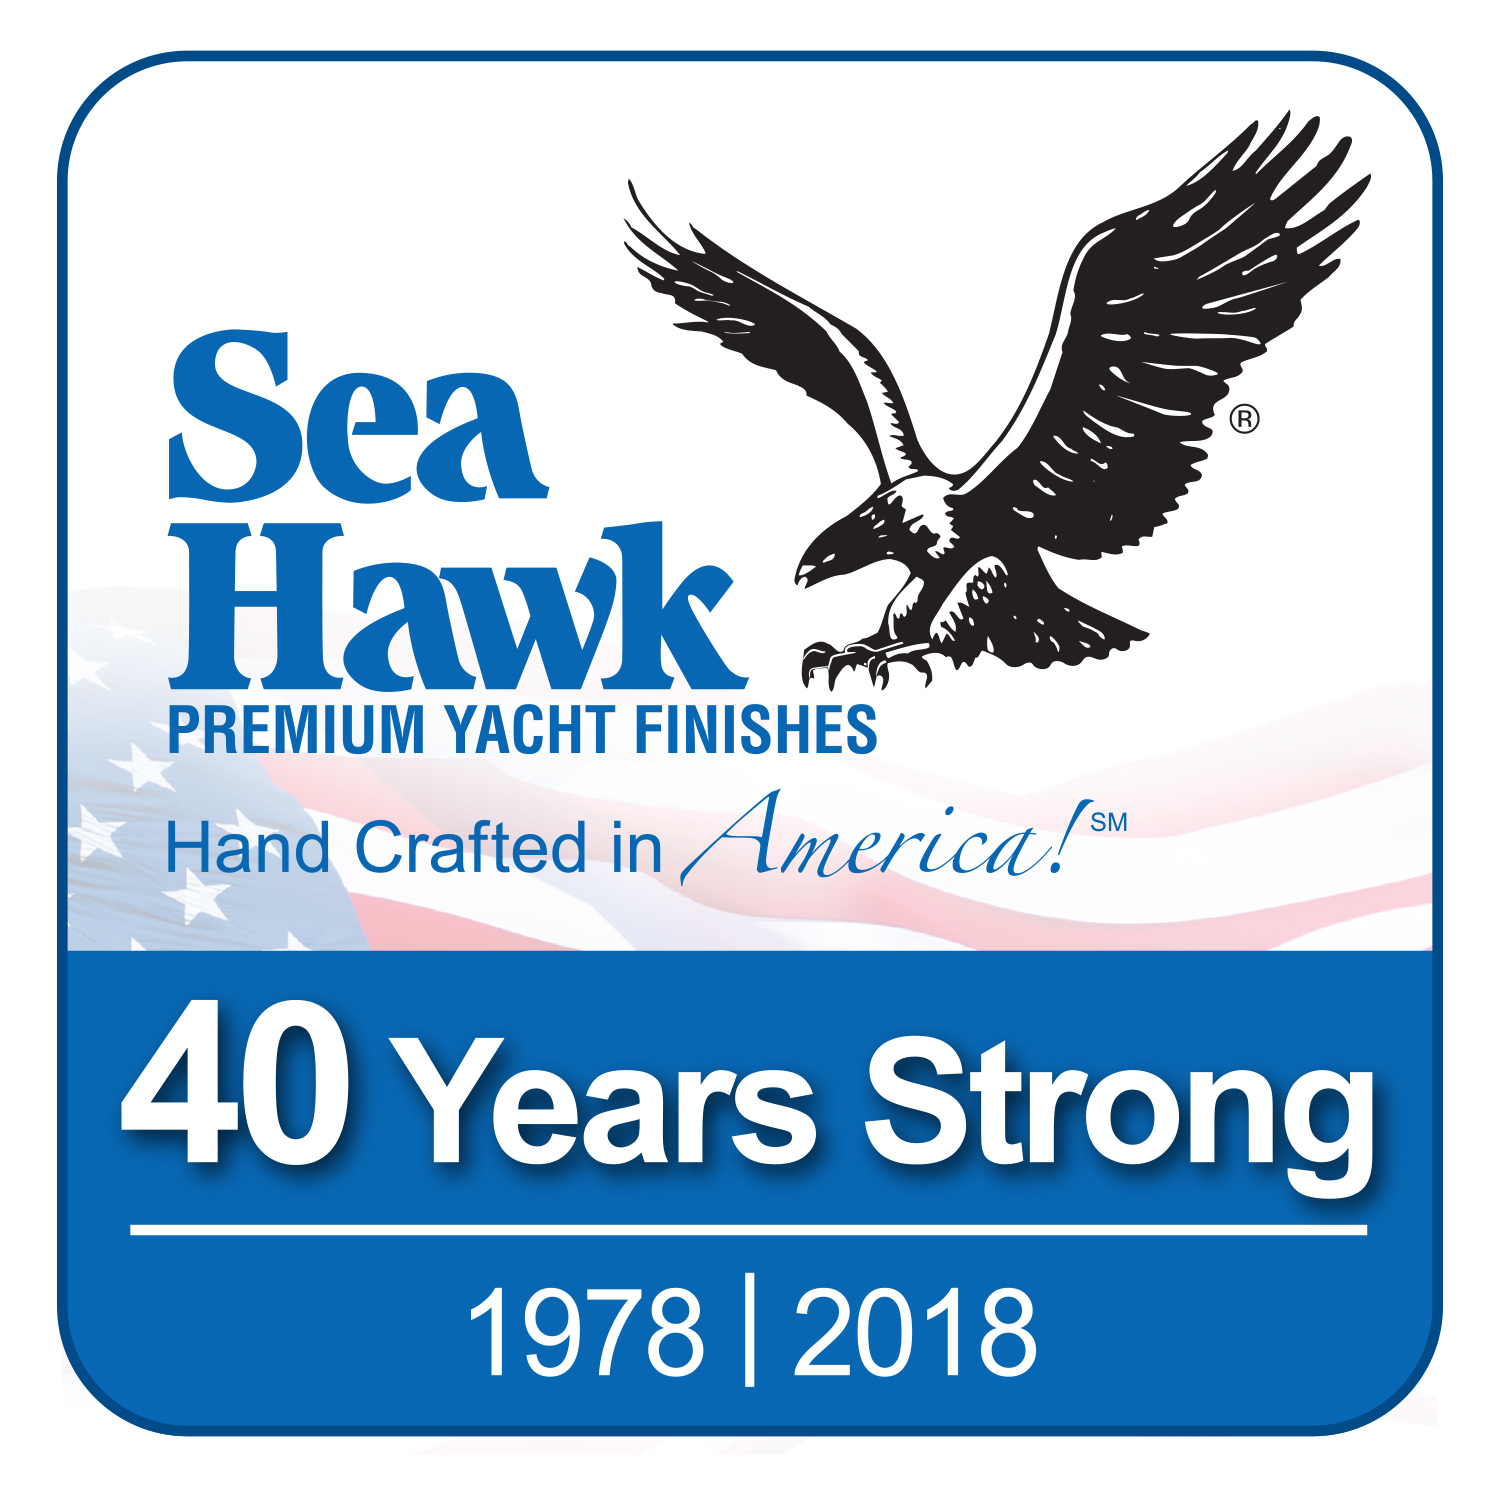 Sea Hawk Paints Celebrates 40th Anniversary